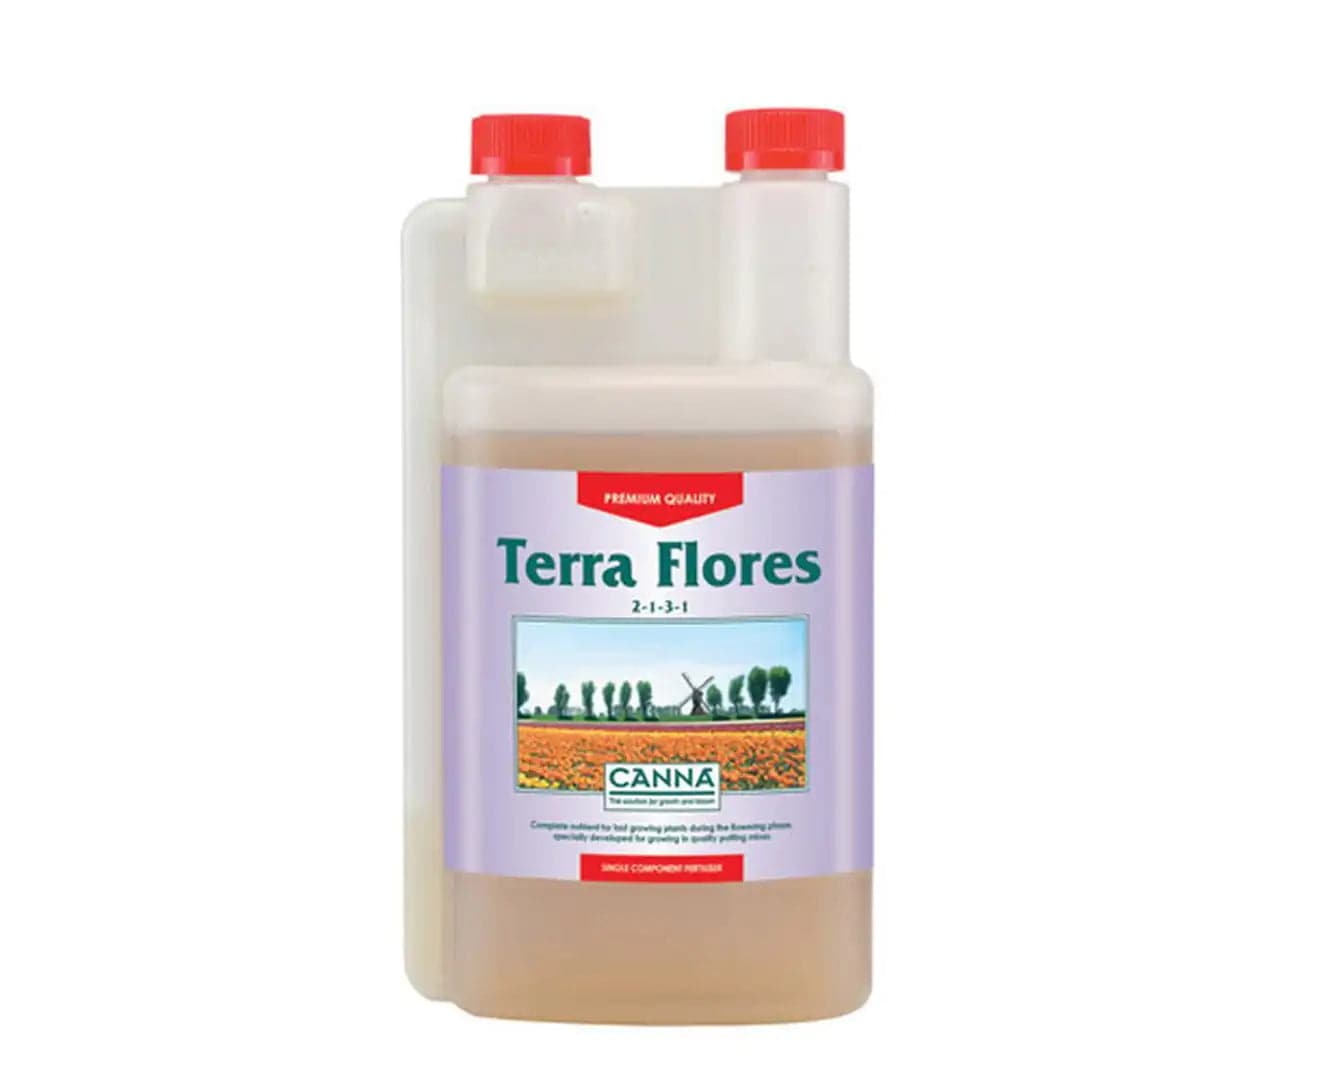 Canna Terra Flores - Green Genius